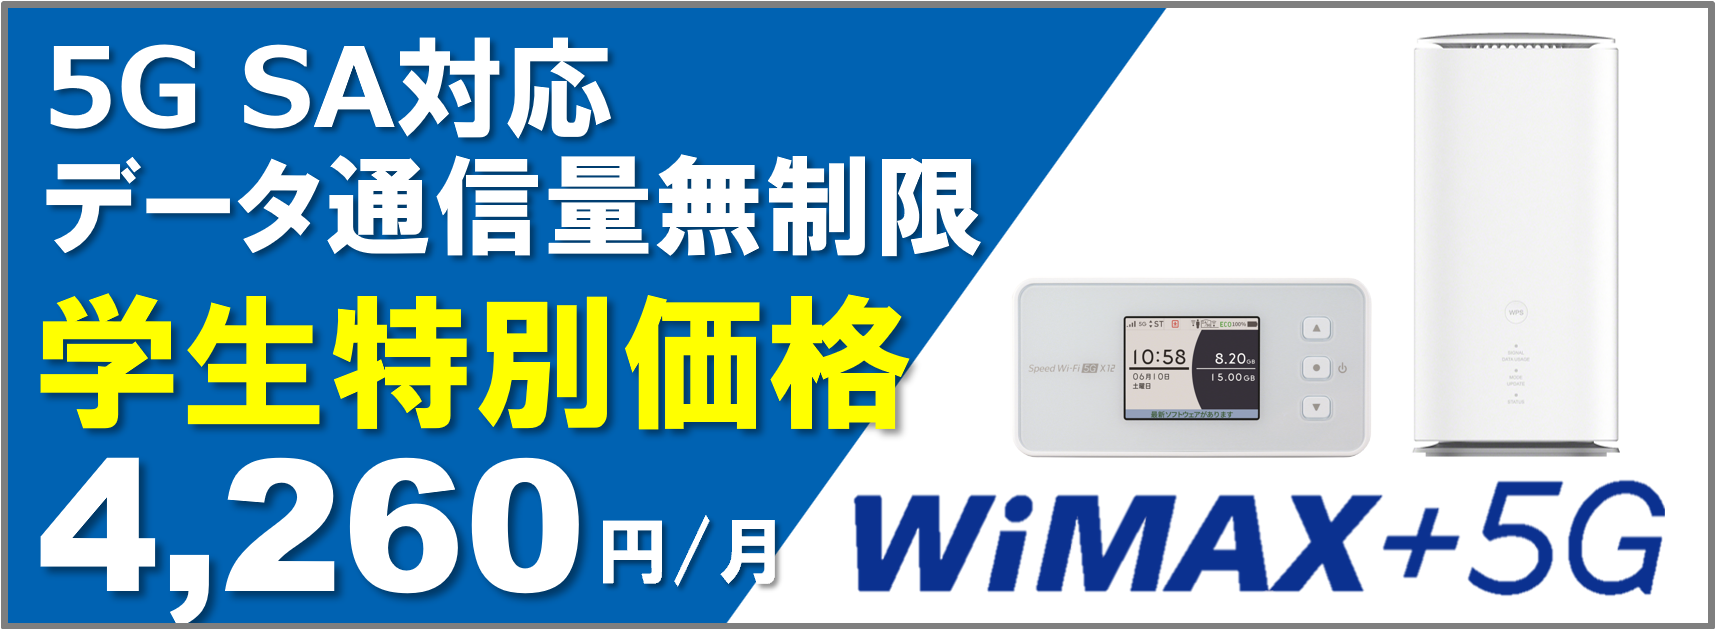 5G SA対応 データ通信量無制限 学生特別価格 4,260円/月 WiMAX+5G